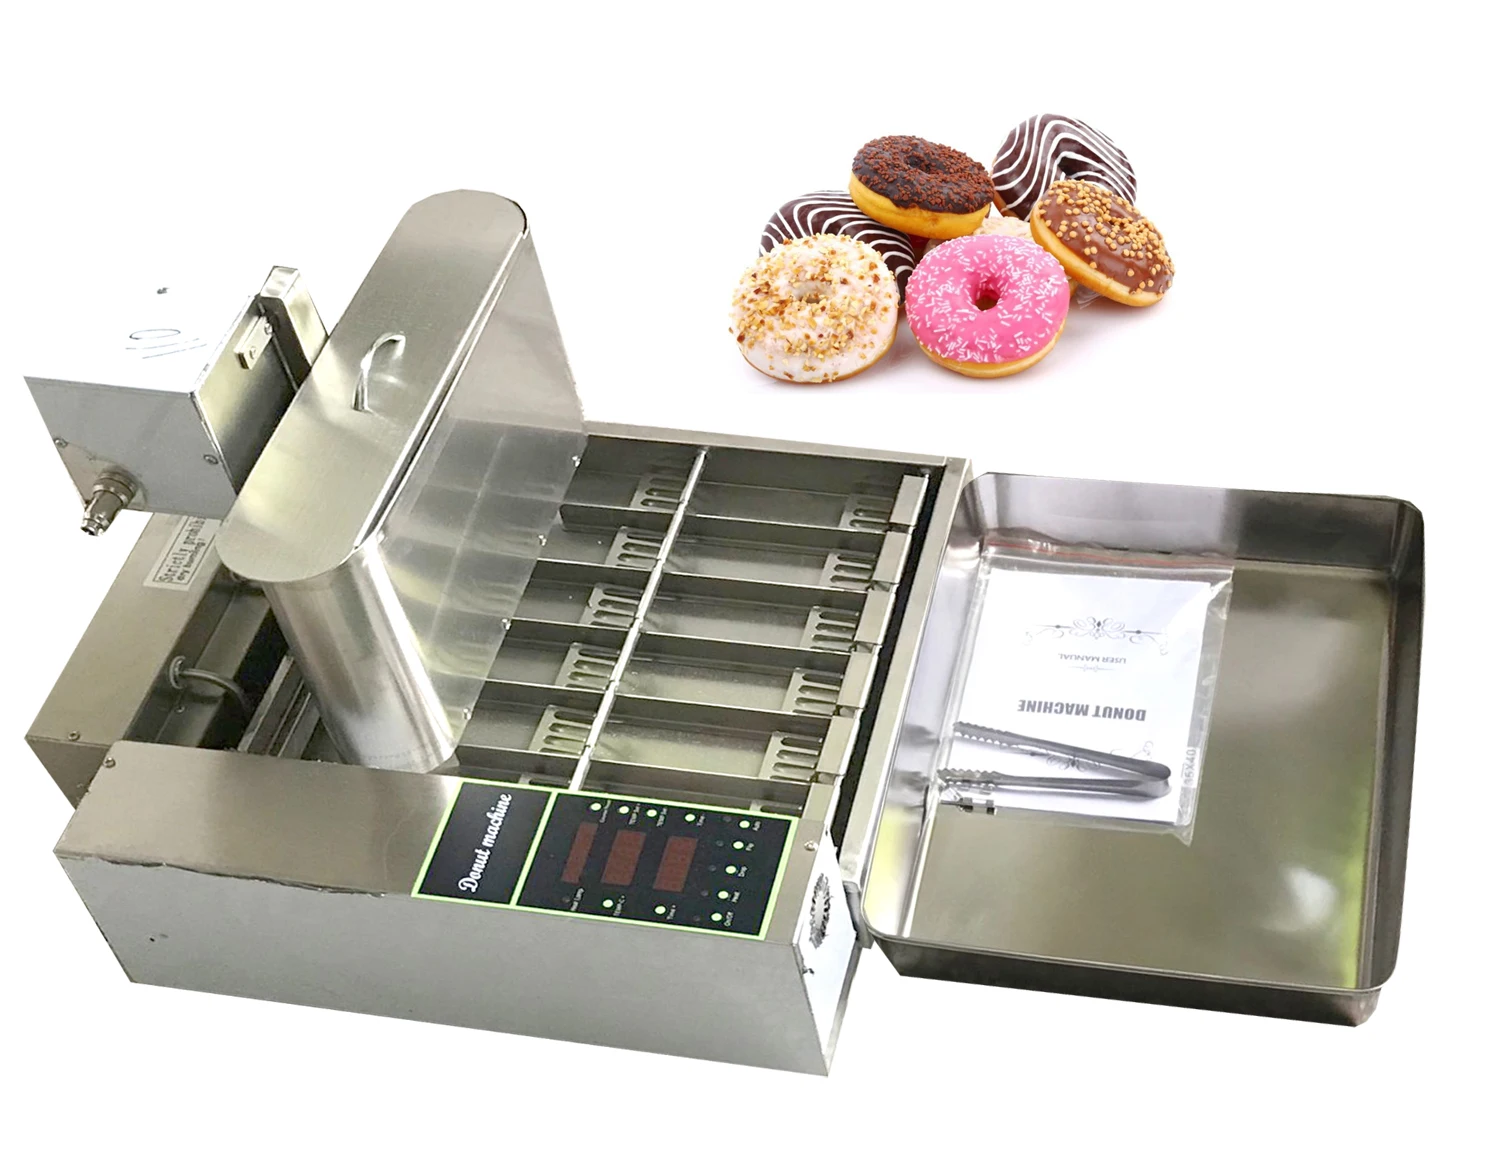 1500-2000 PCS Automatic Donut Maker/Donut Fryer/Four rows of mini doughnuts machine